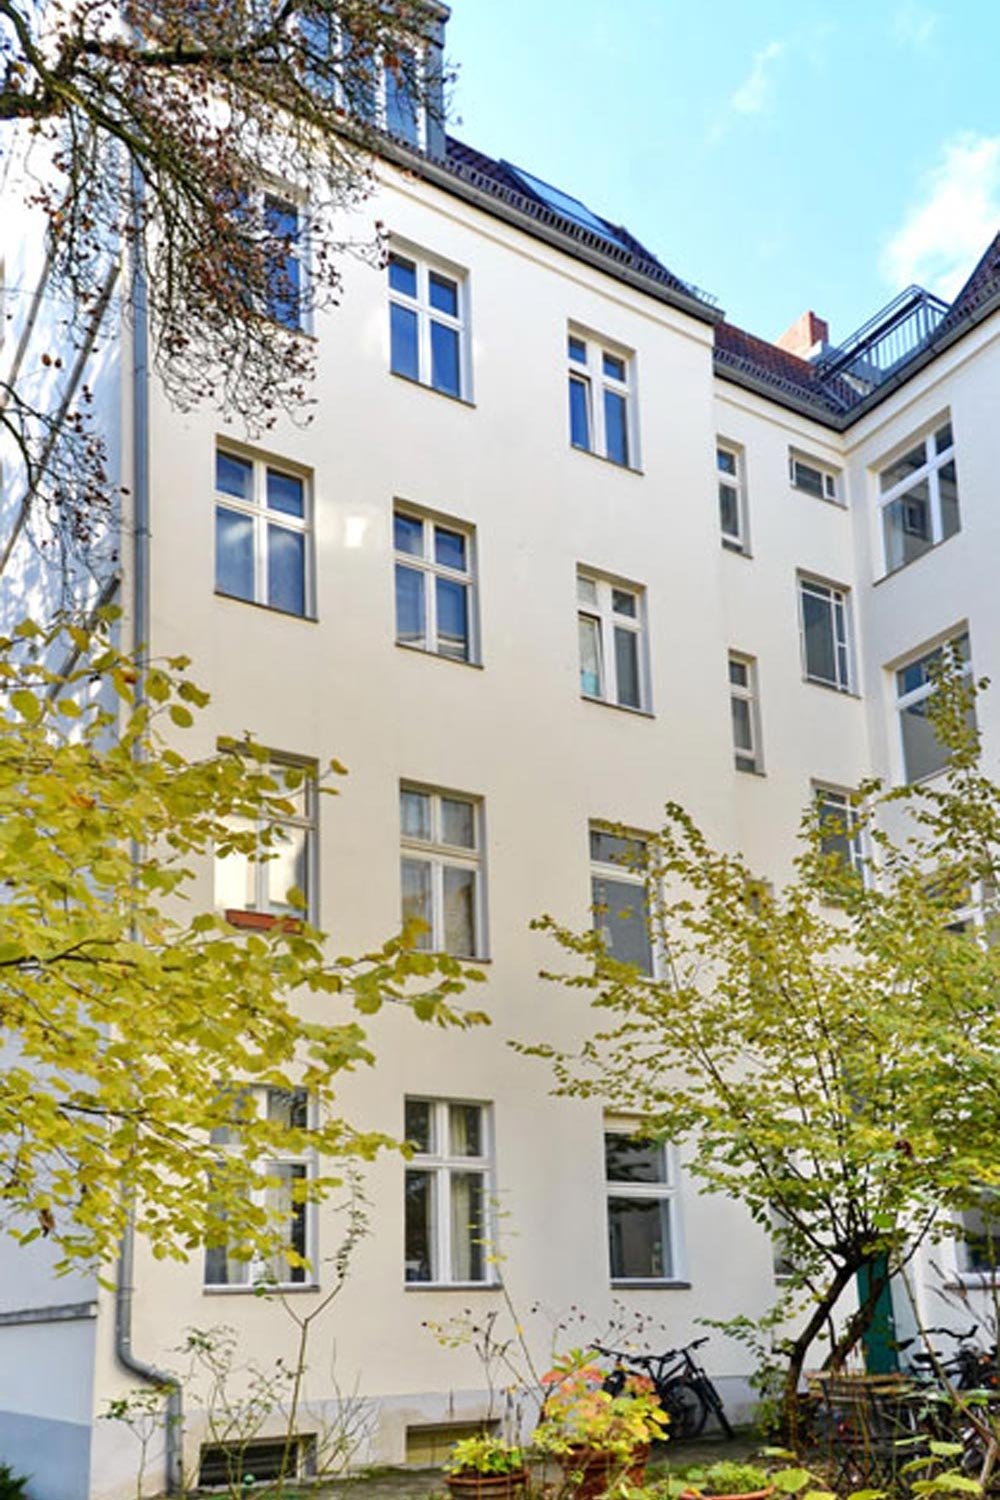 Image new build property condominiums ALTHOFF 18 Berlin / Steglitz